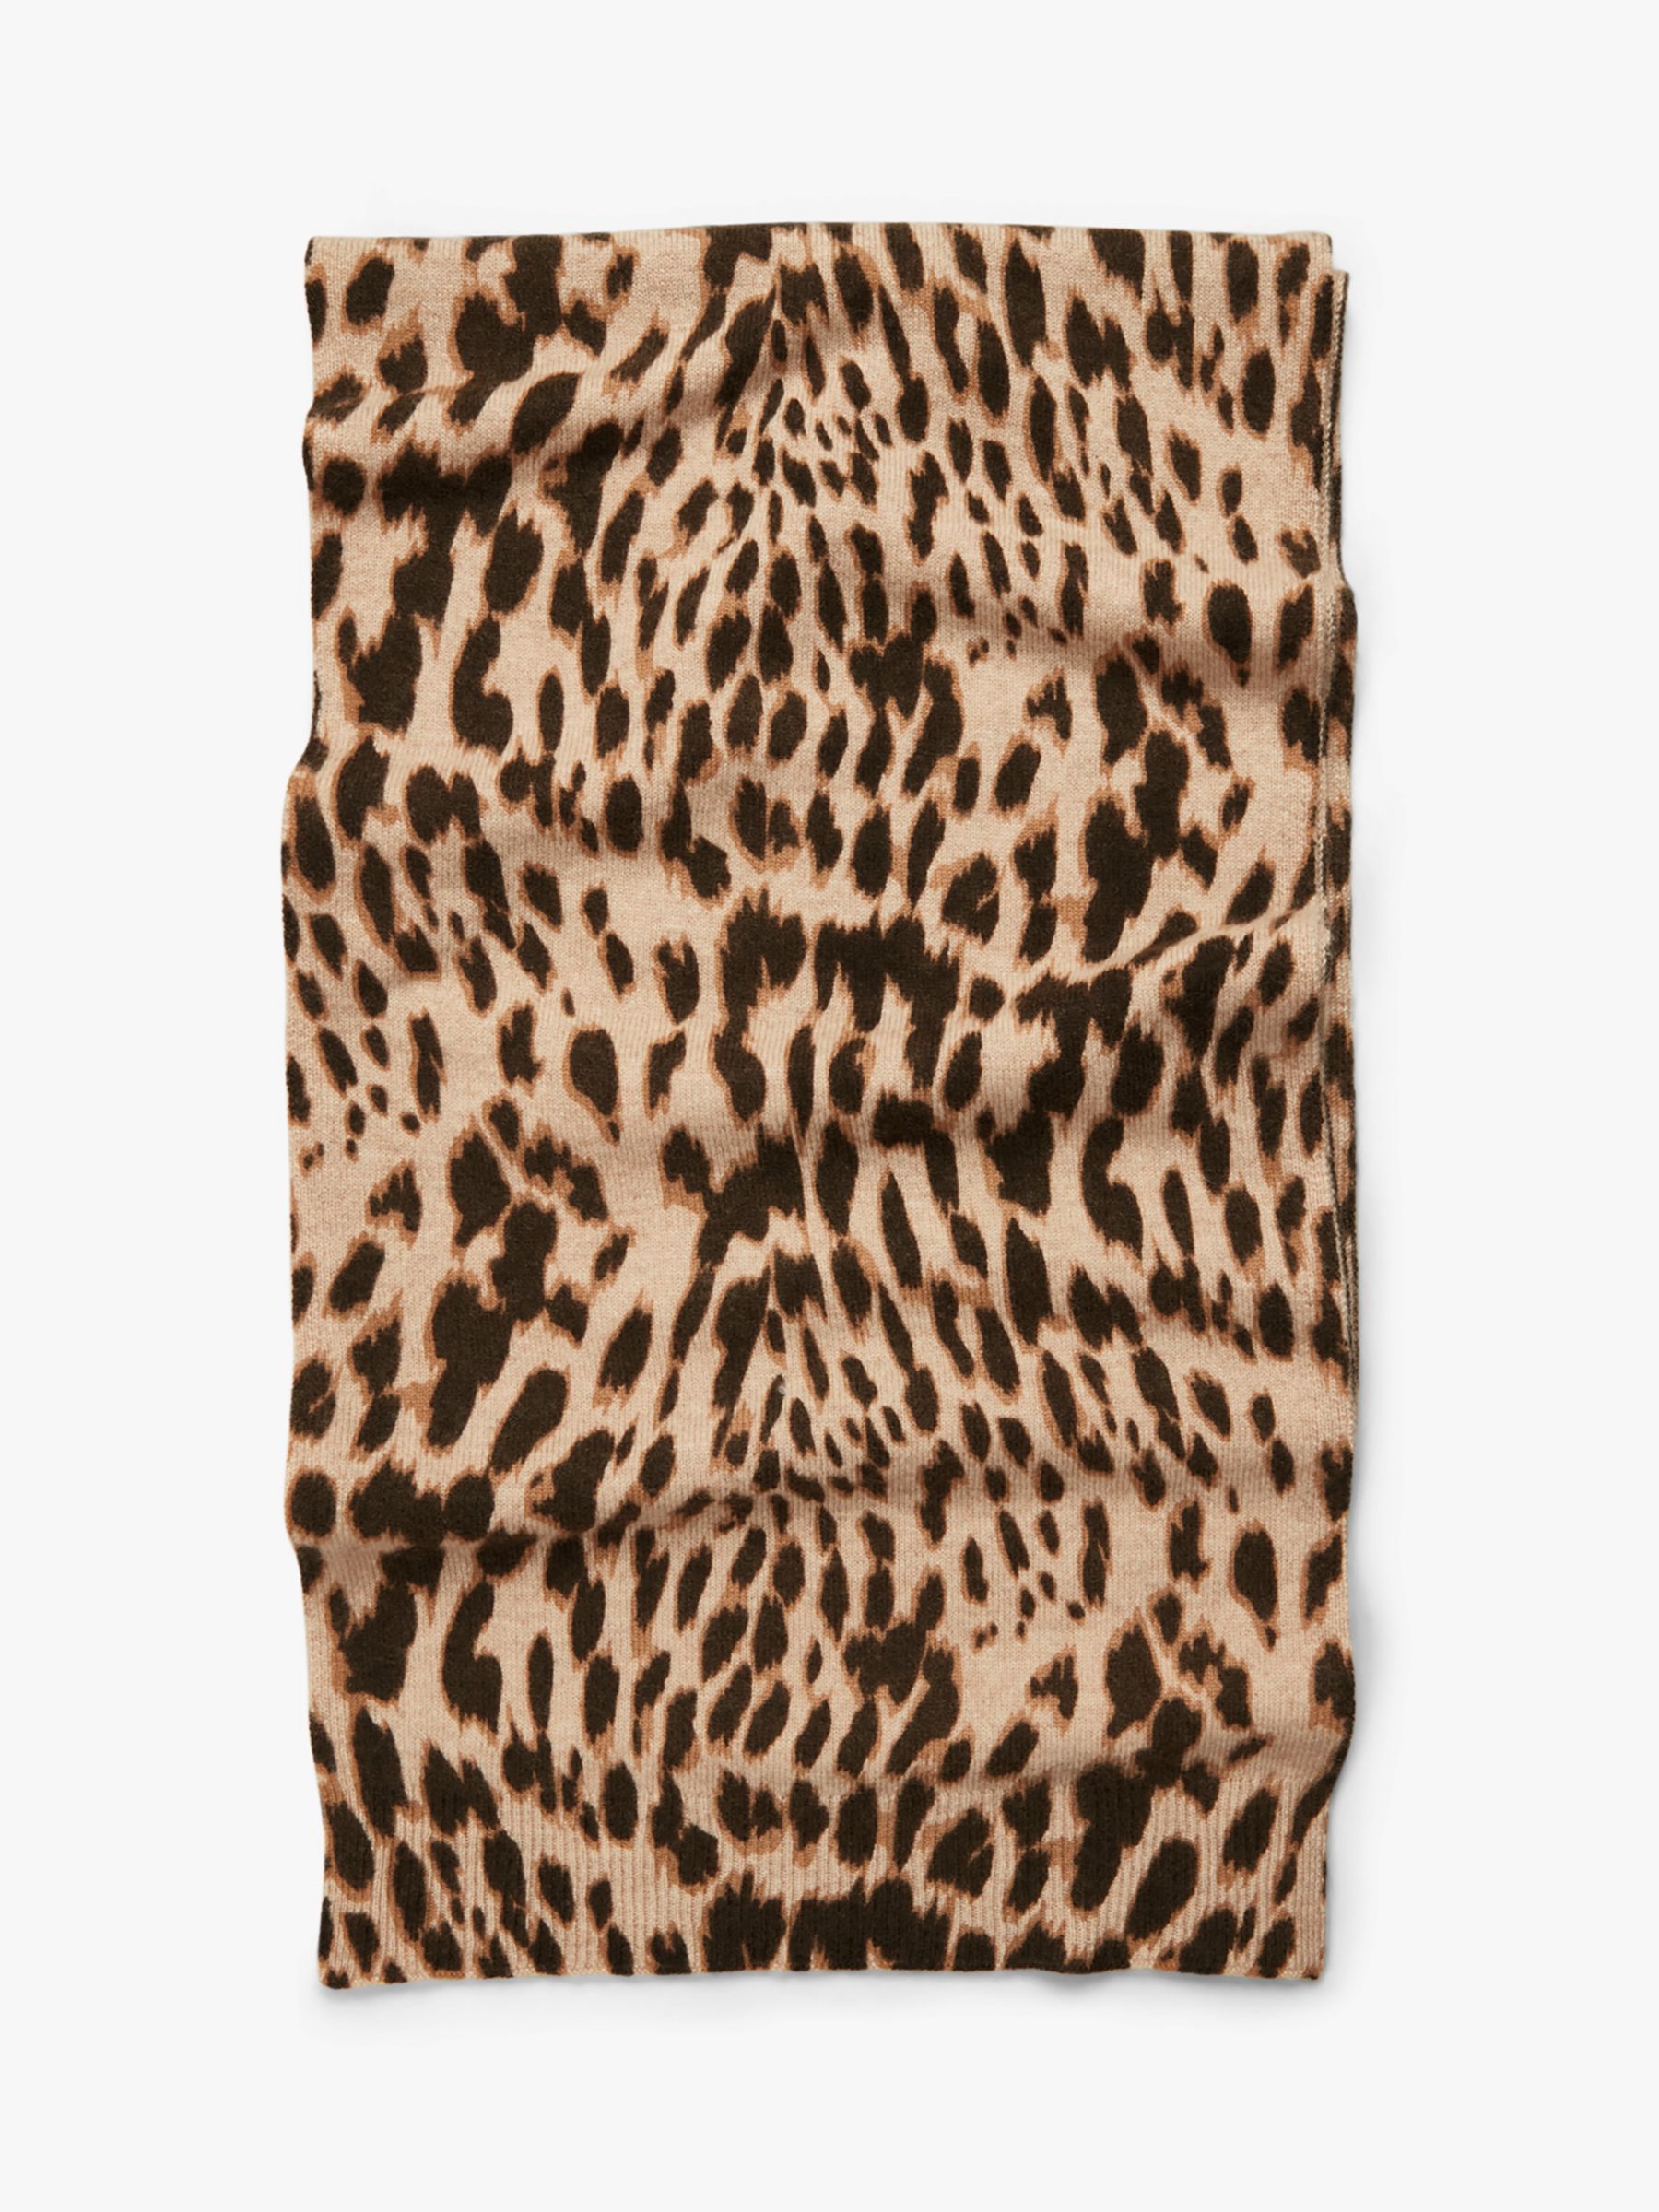 HUSH Leopard Print Cashmere Scarf, Multi at John Lewis & Partners